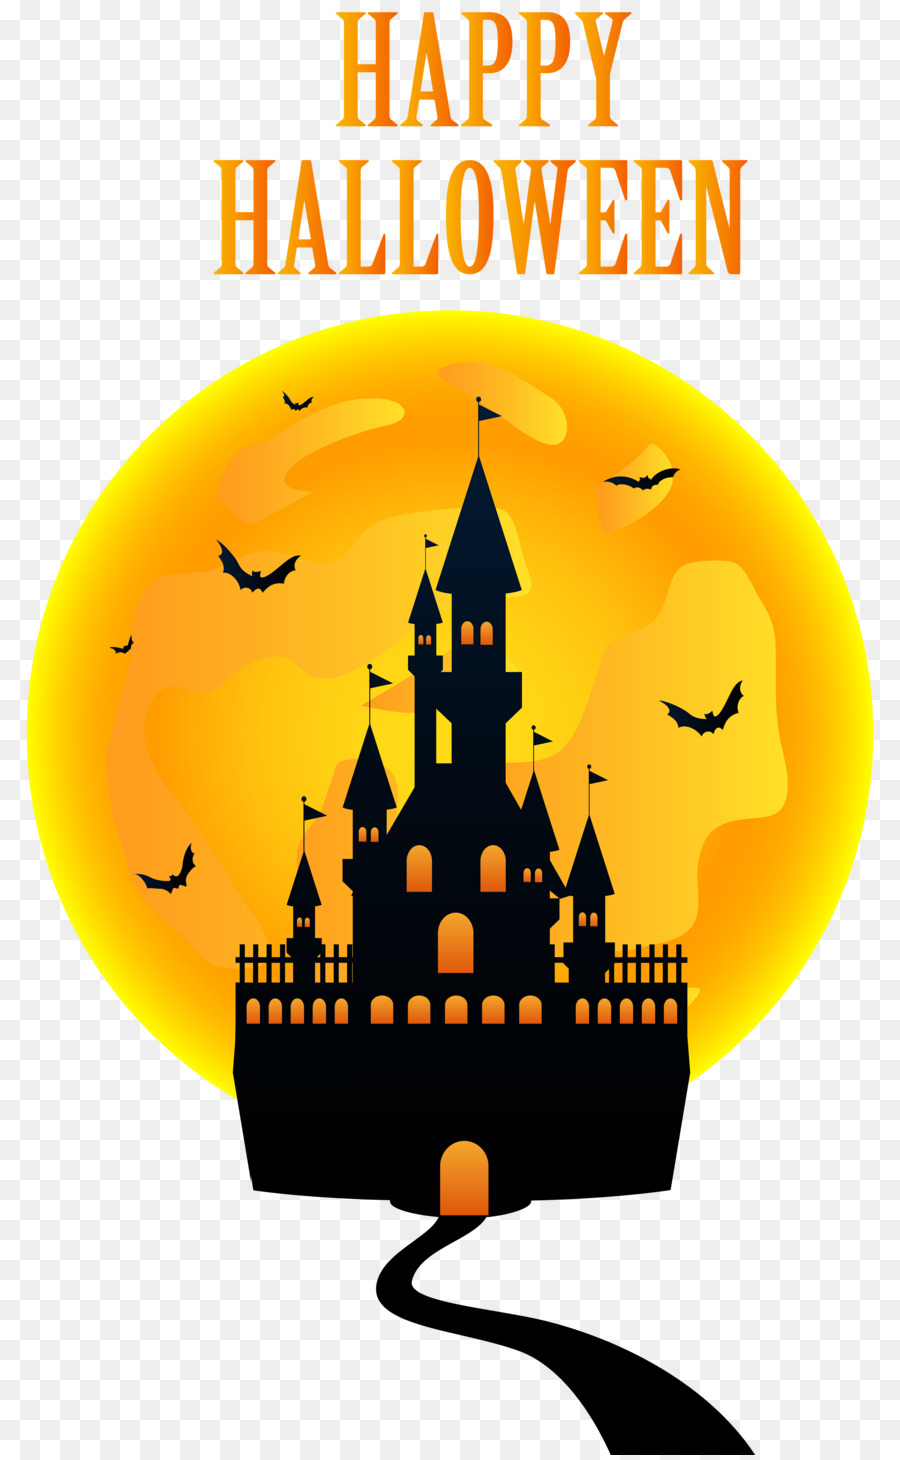 Halloween-Kuchen-YouTube Clip-art - Halloween